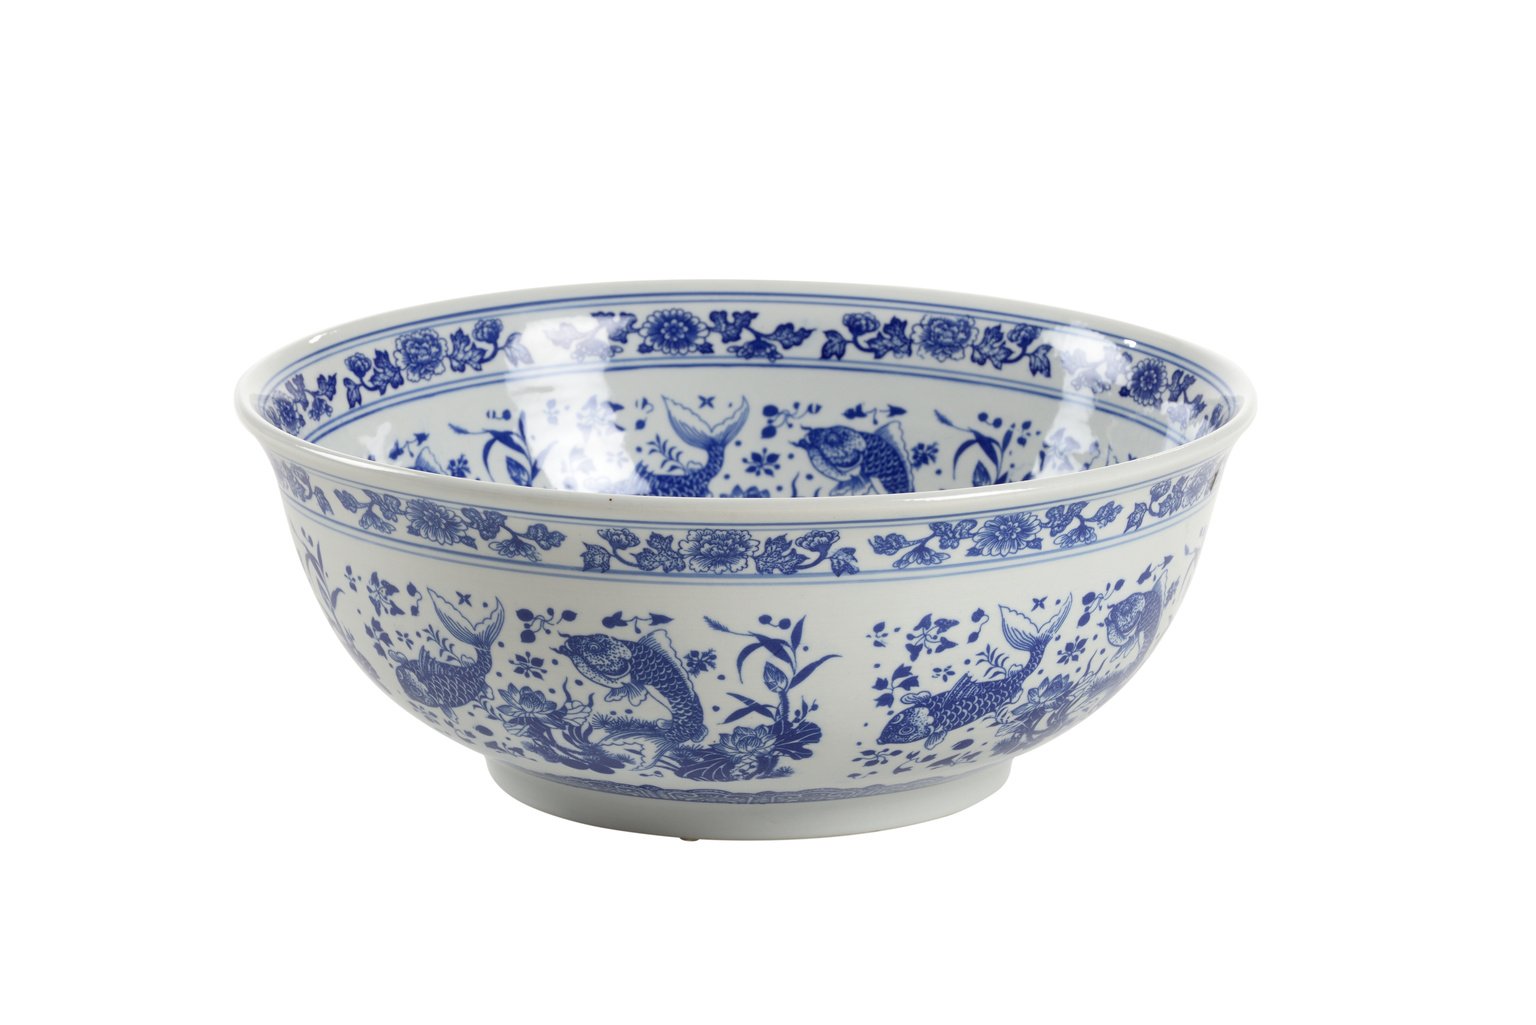 Decorative Accessories  Chinoiserie  Bowl  Blue and White  Blue & White  asian  Accessories Blue & White